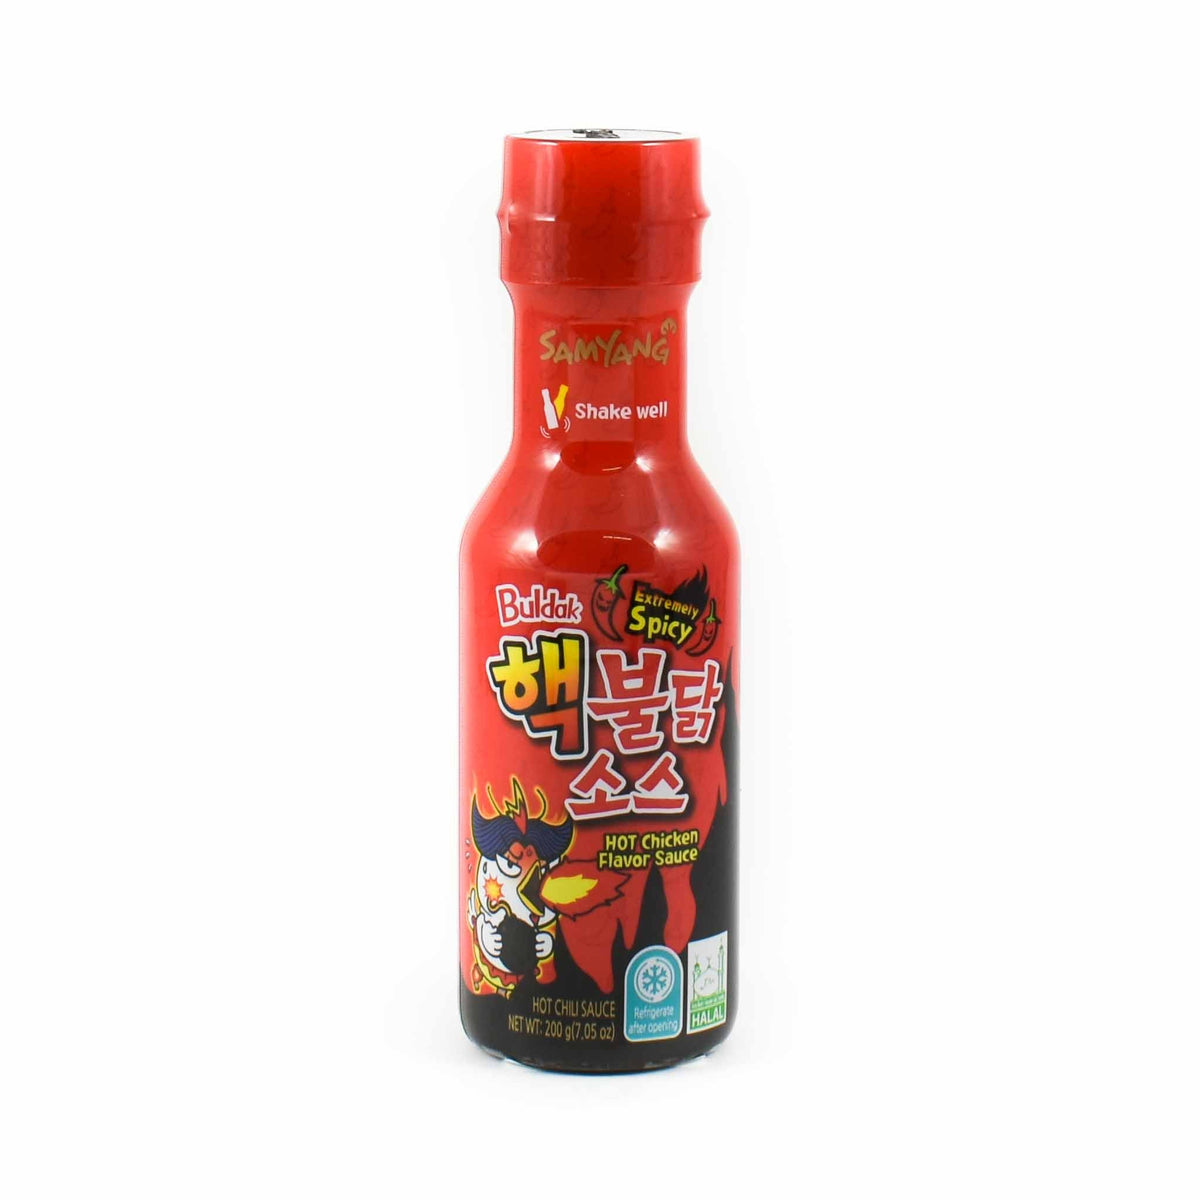 BULDAK Sauce Hot Chicken Flavor - Samyang 200g